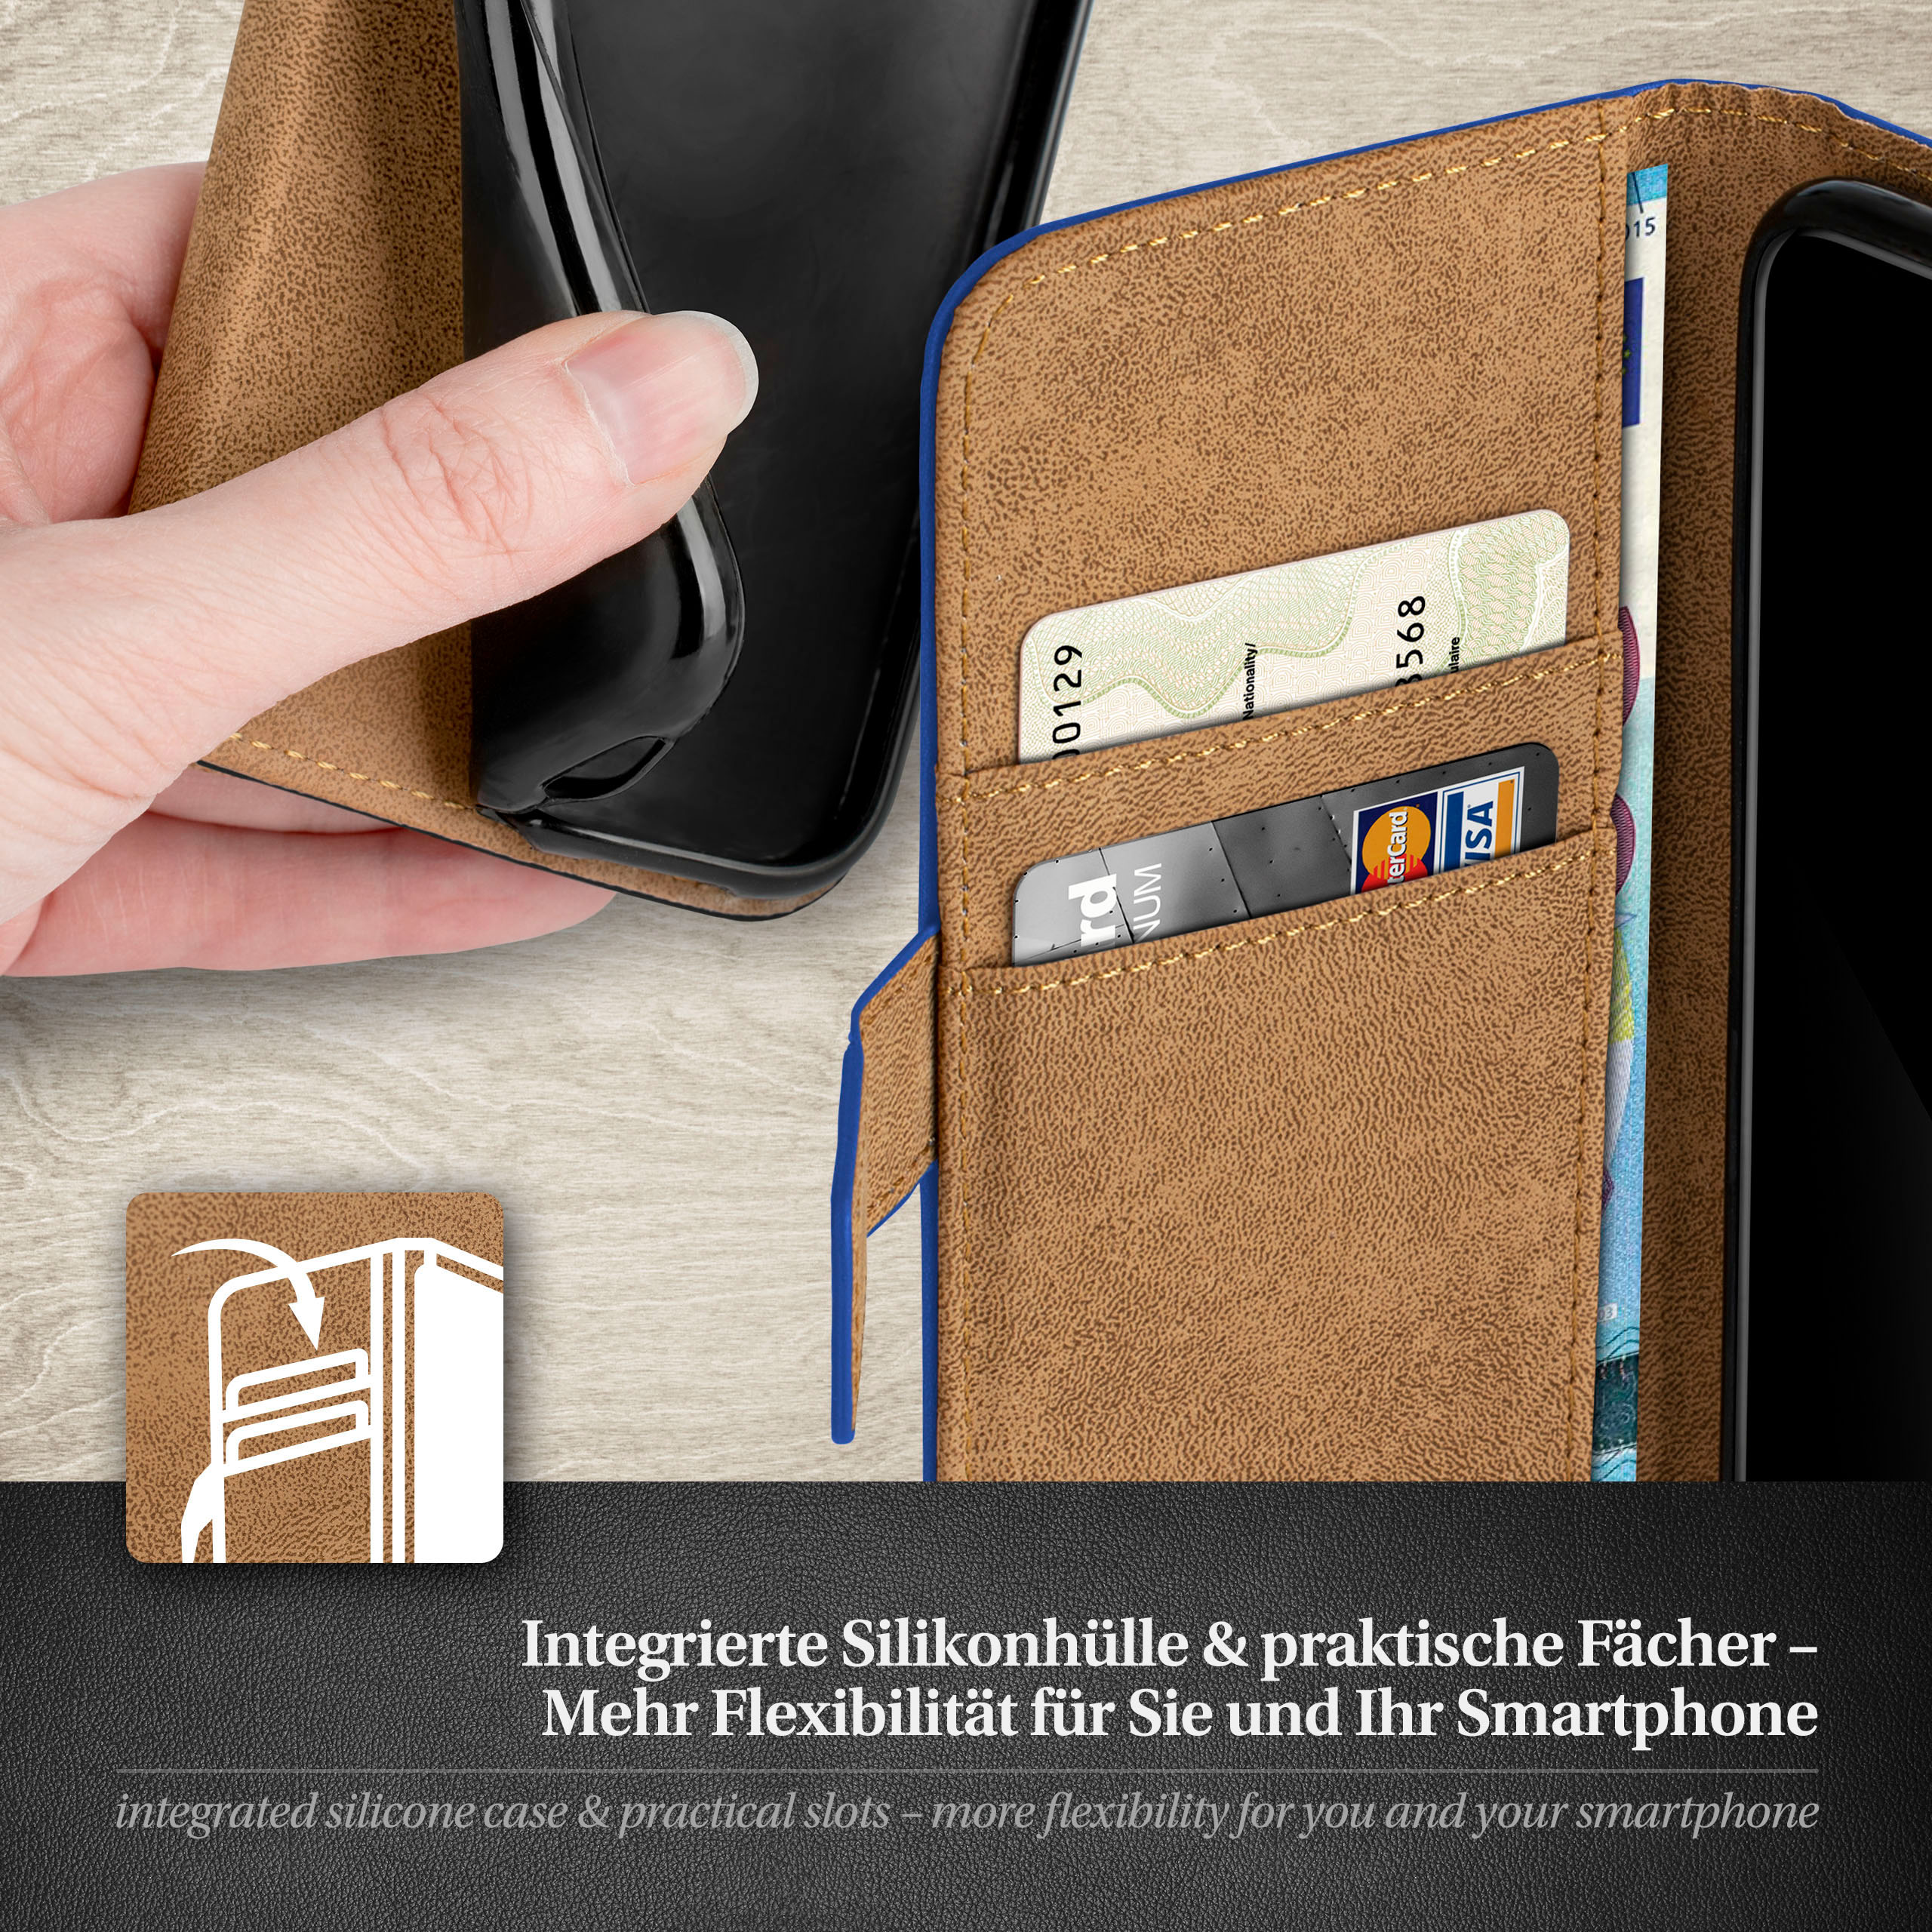 MOEX Edge, Bookcover, Book S7 Samsung, Case, Galaxy Royal-Blue